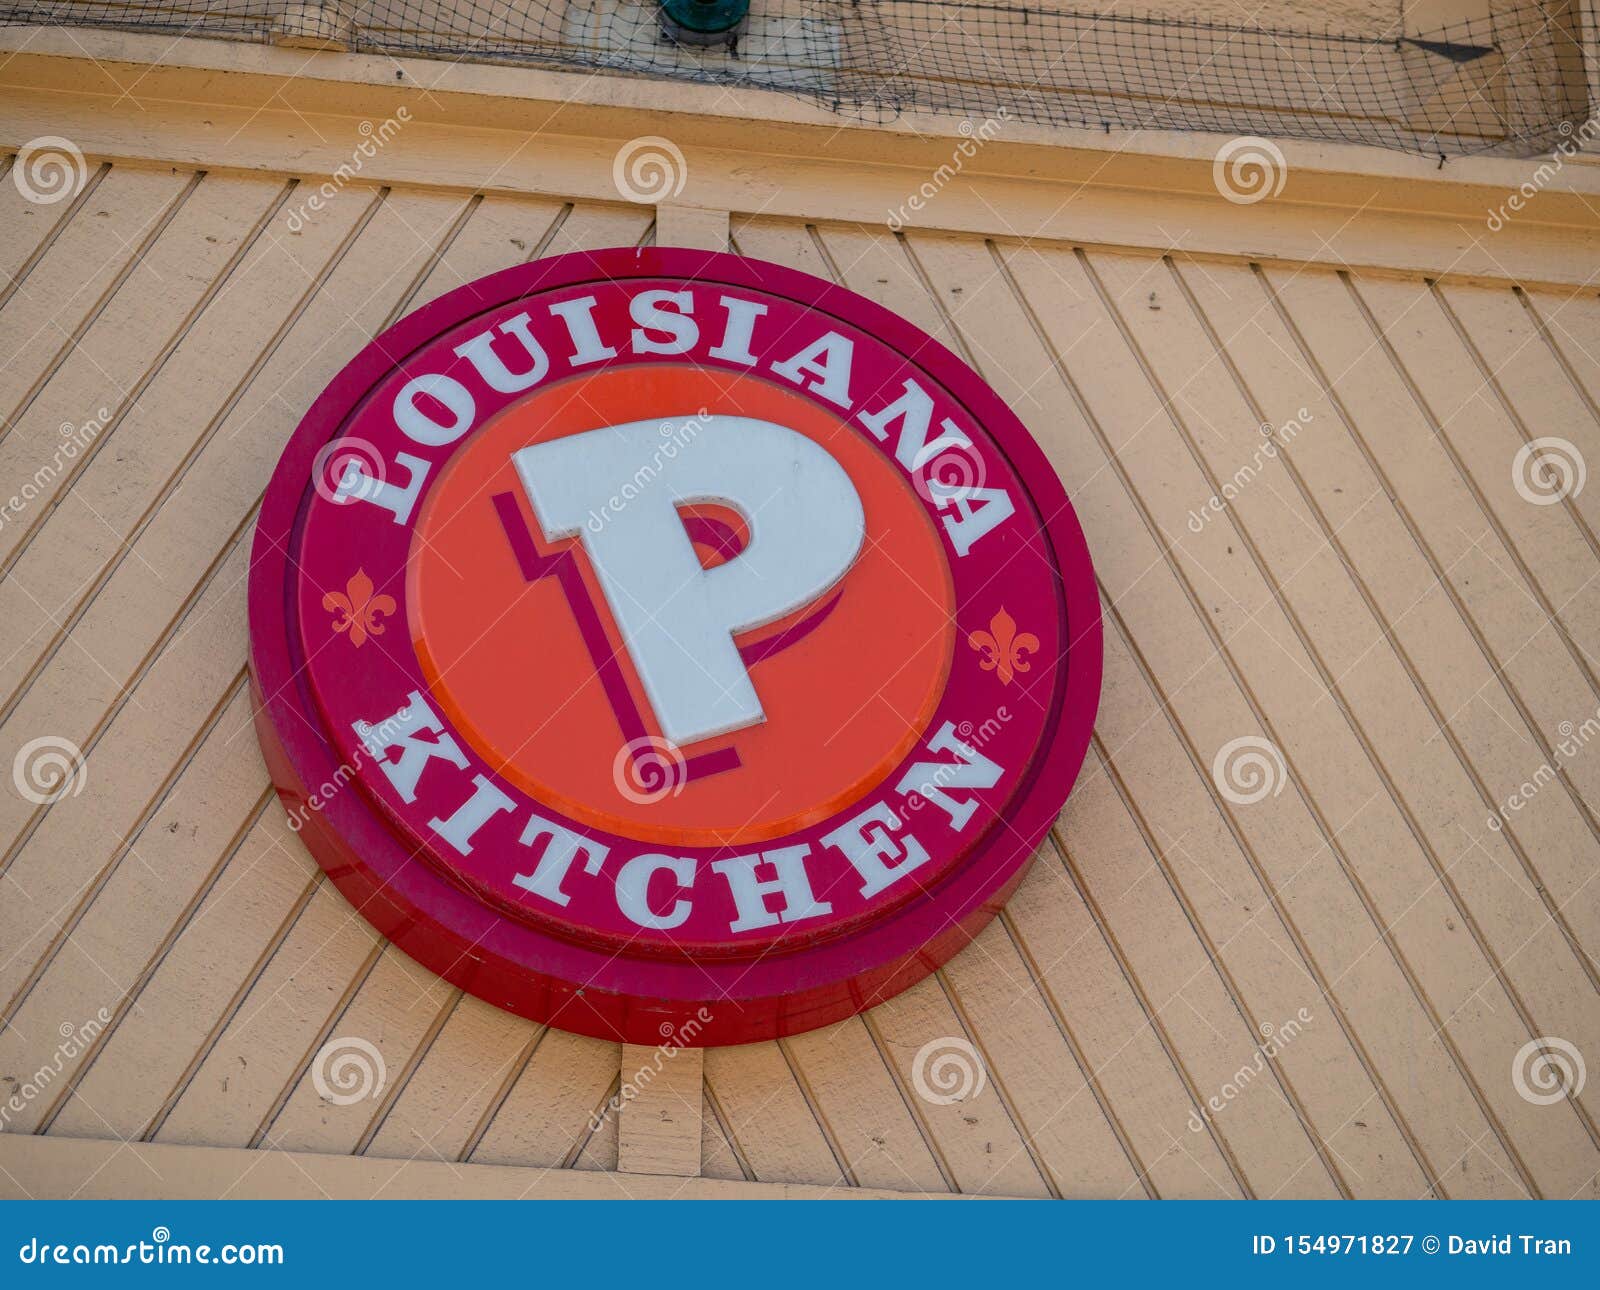 Popeyes Louisiana Chicken Fast Food Restaurant Logo On Branch Location Editorial Photography ...